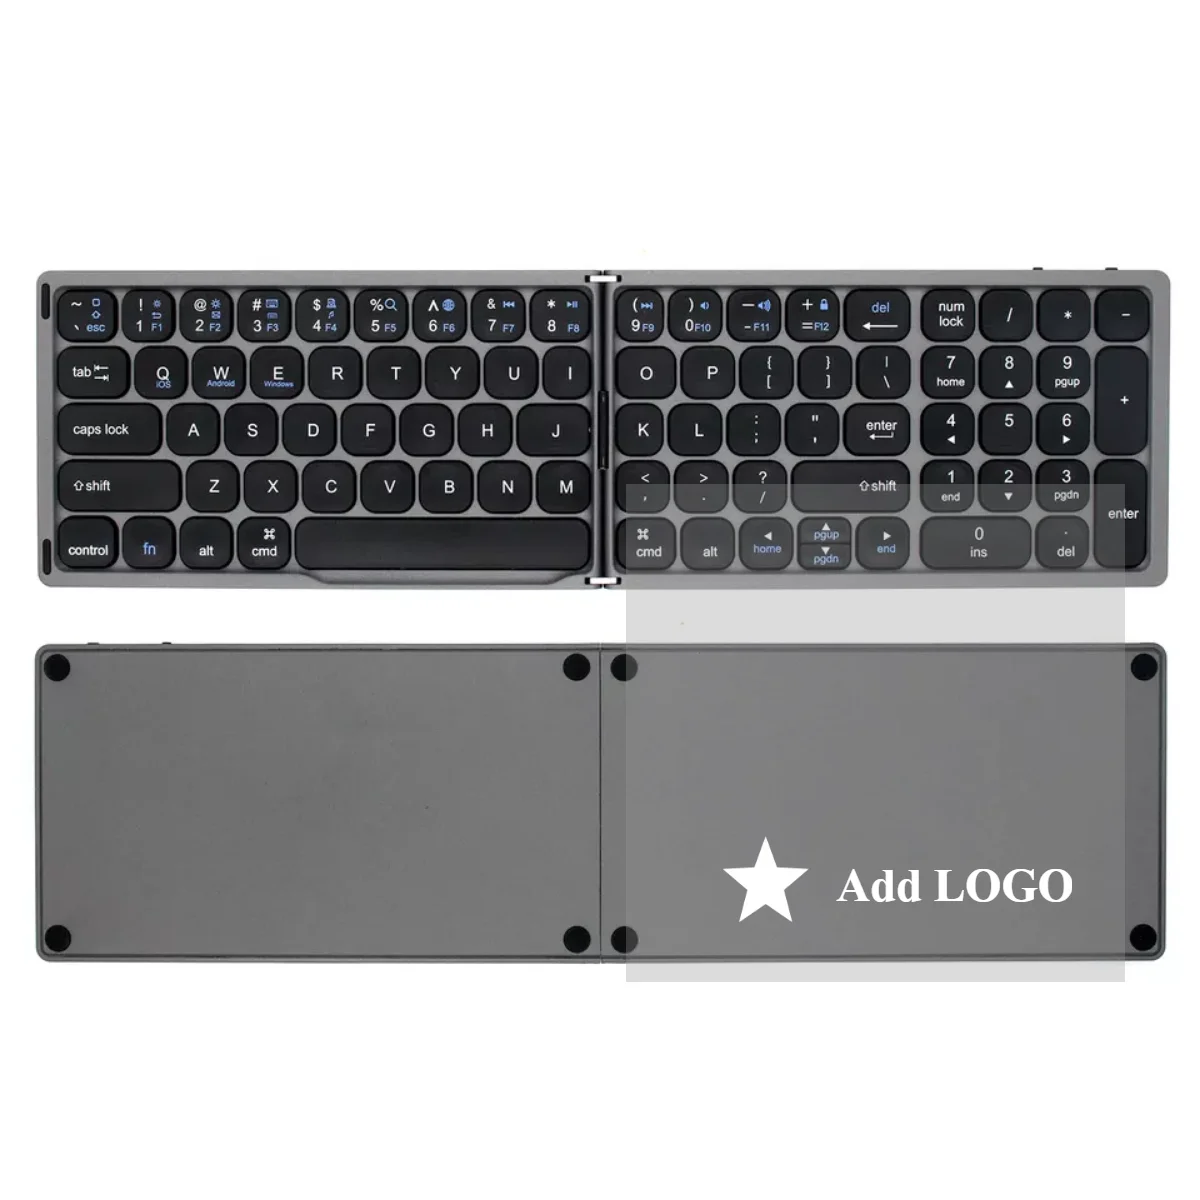 half keyboard teclado plegable inalambrico for cell phone images - 6